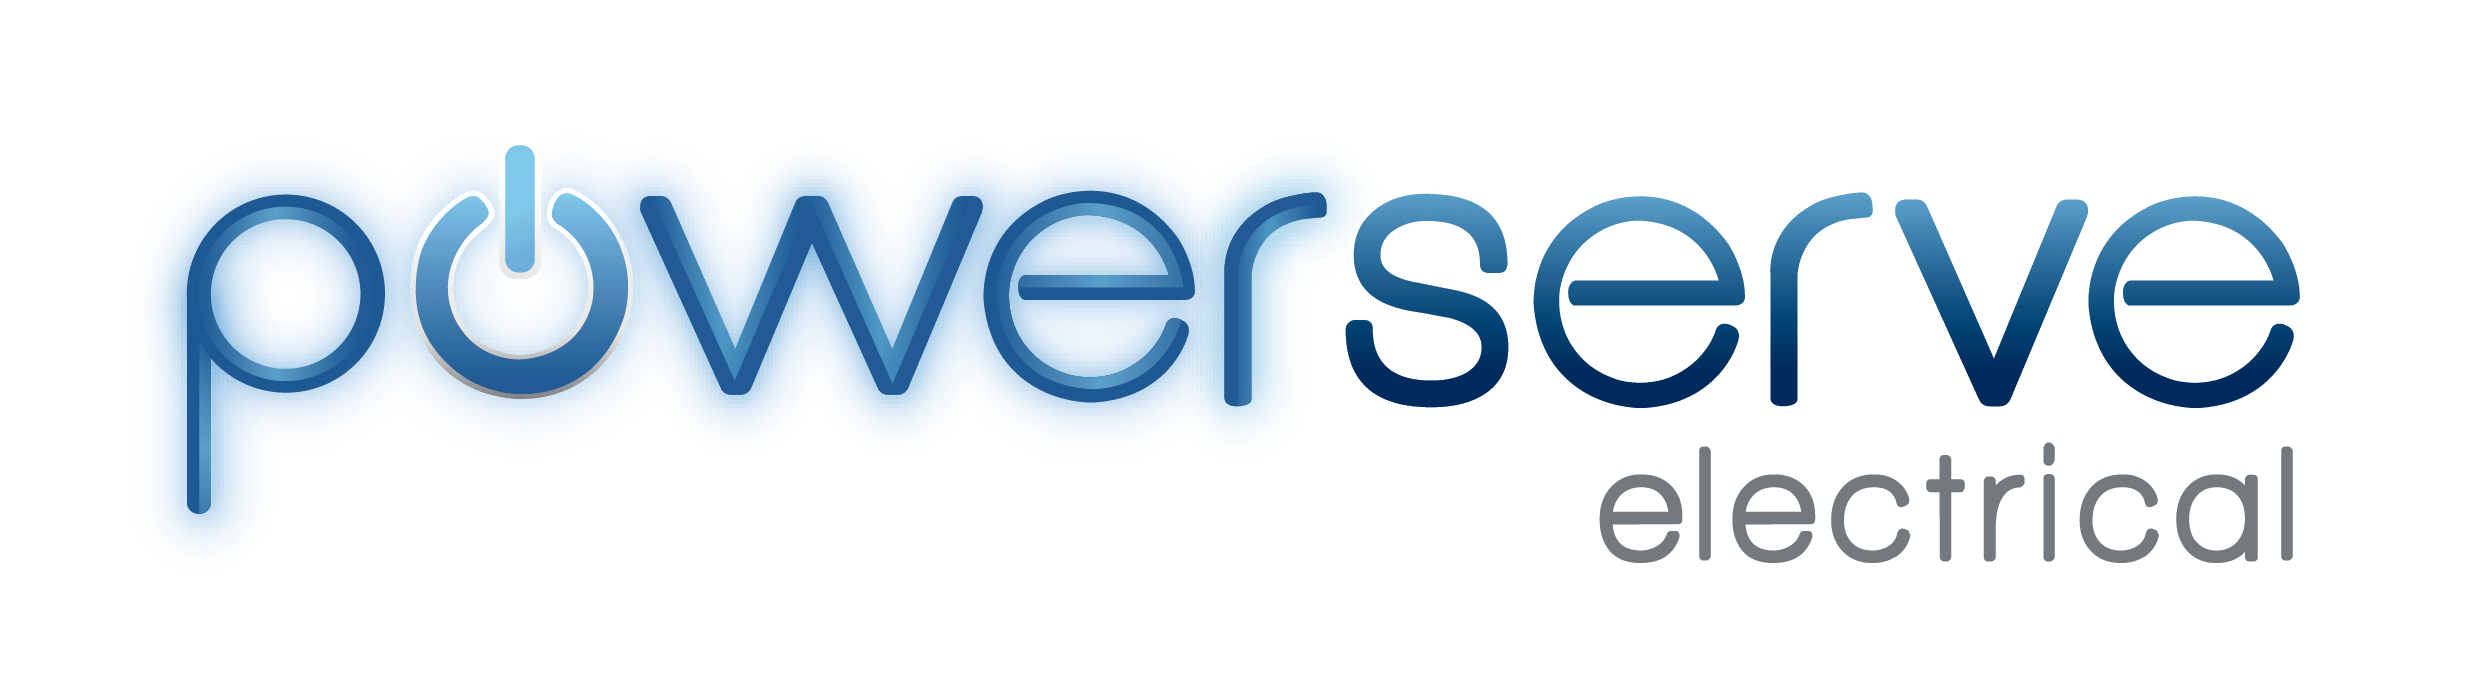 Powerserve 2016 logo big